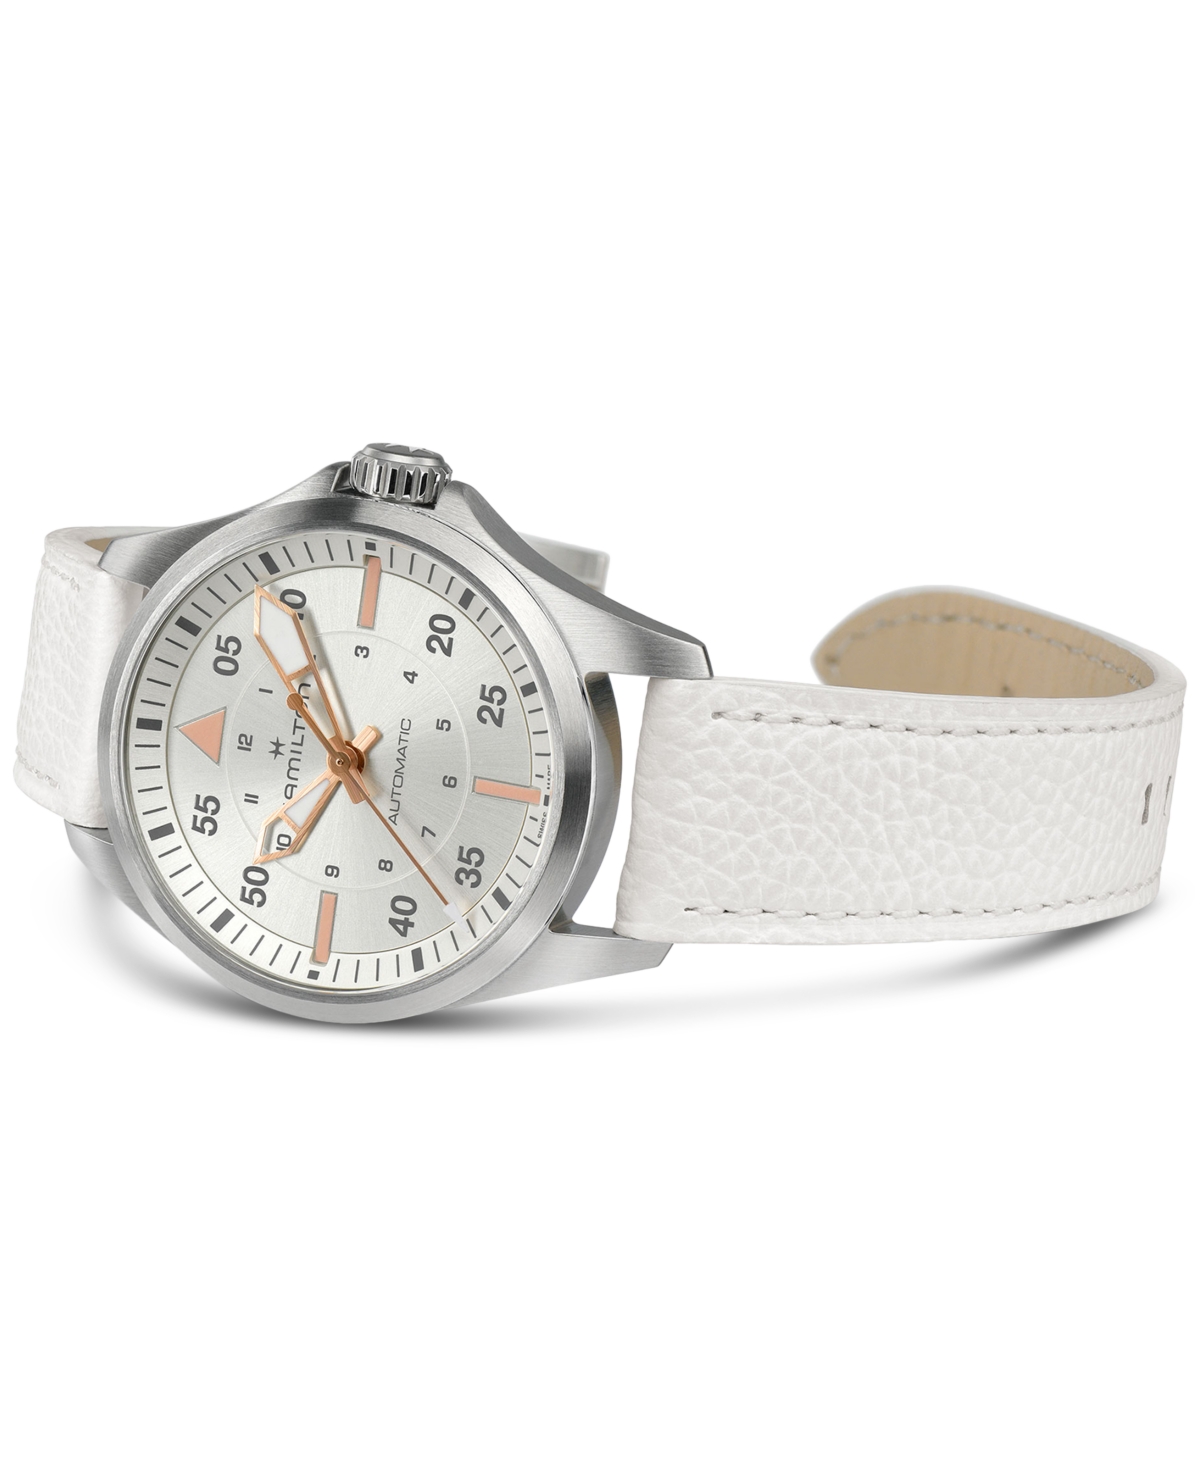 Shop Hamilton Women's Swiss Automatic Khaki Aviation White Leather Strap Watch 36mm